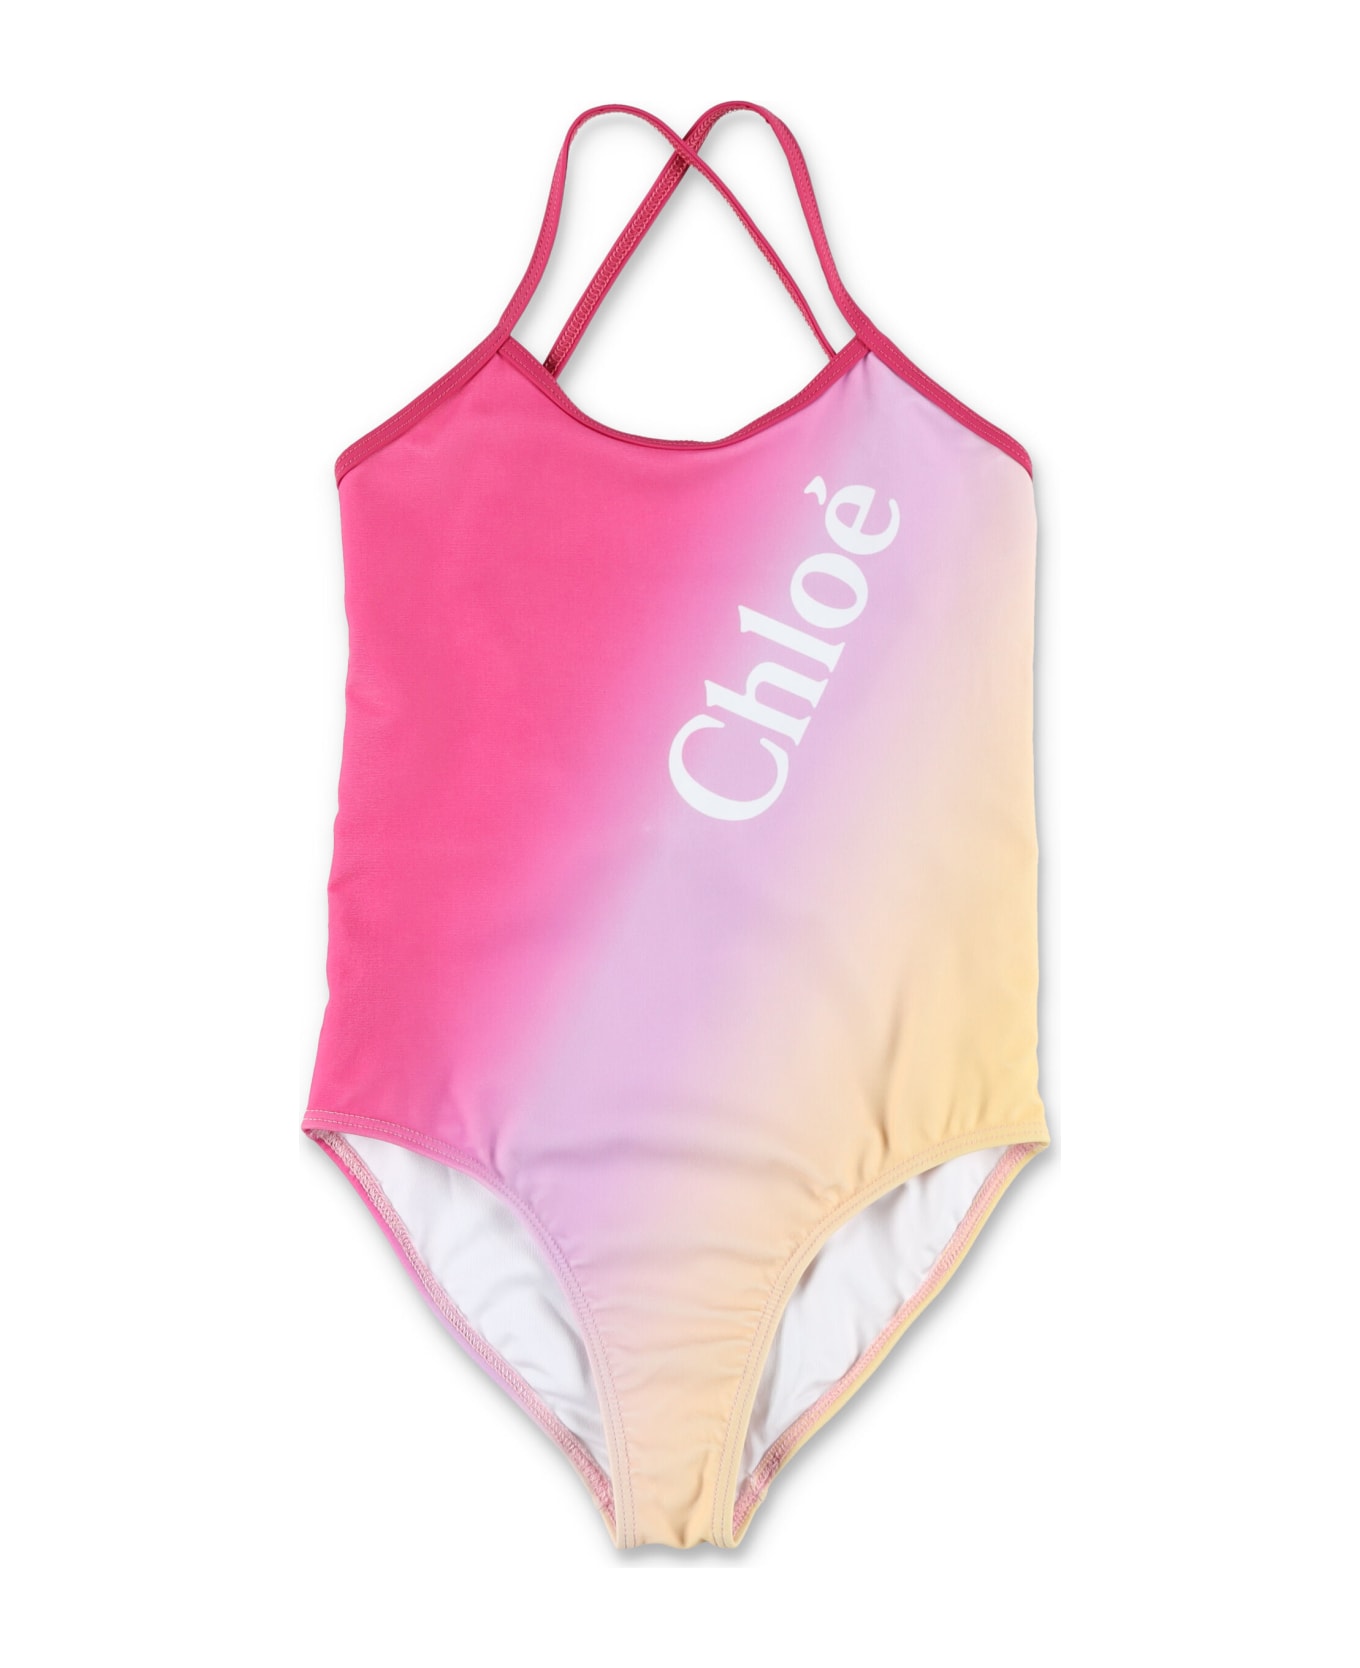 Chloé Logo One-piece Swimsuit - PINK